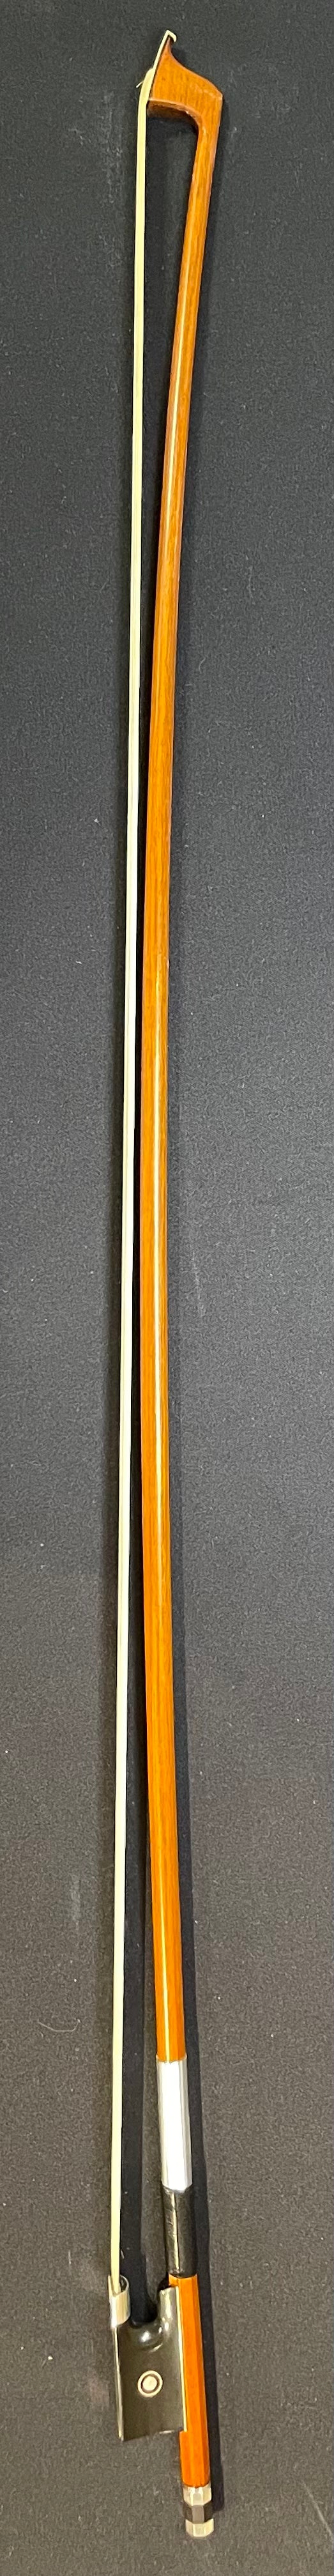 4/4 Violin Bow - TZXS Model